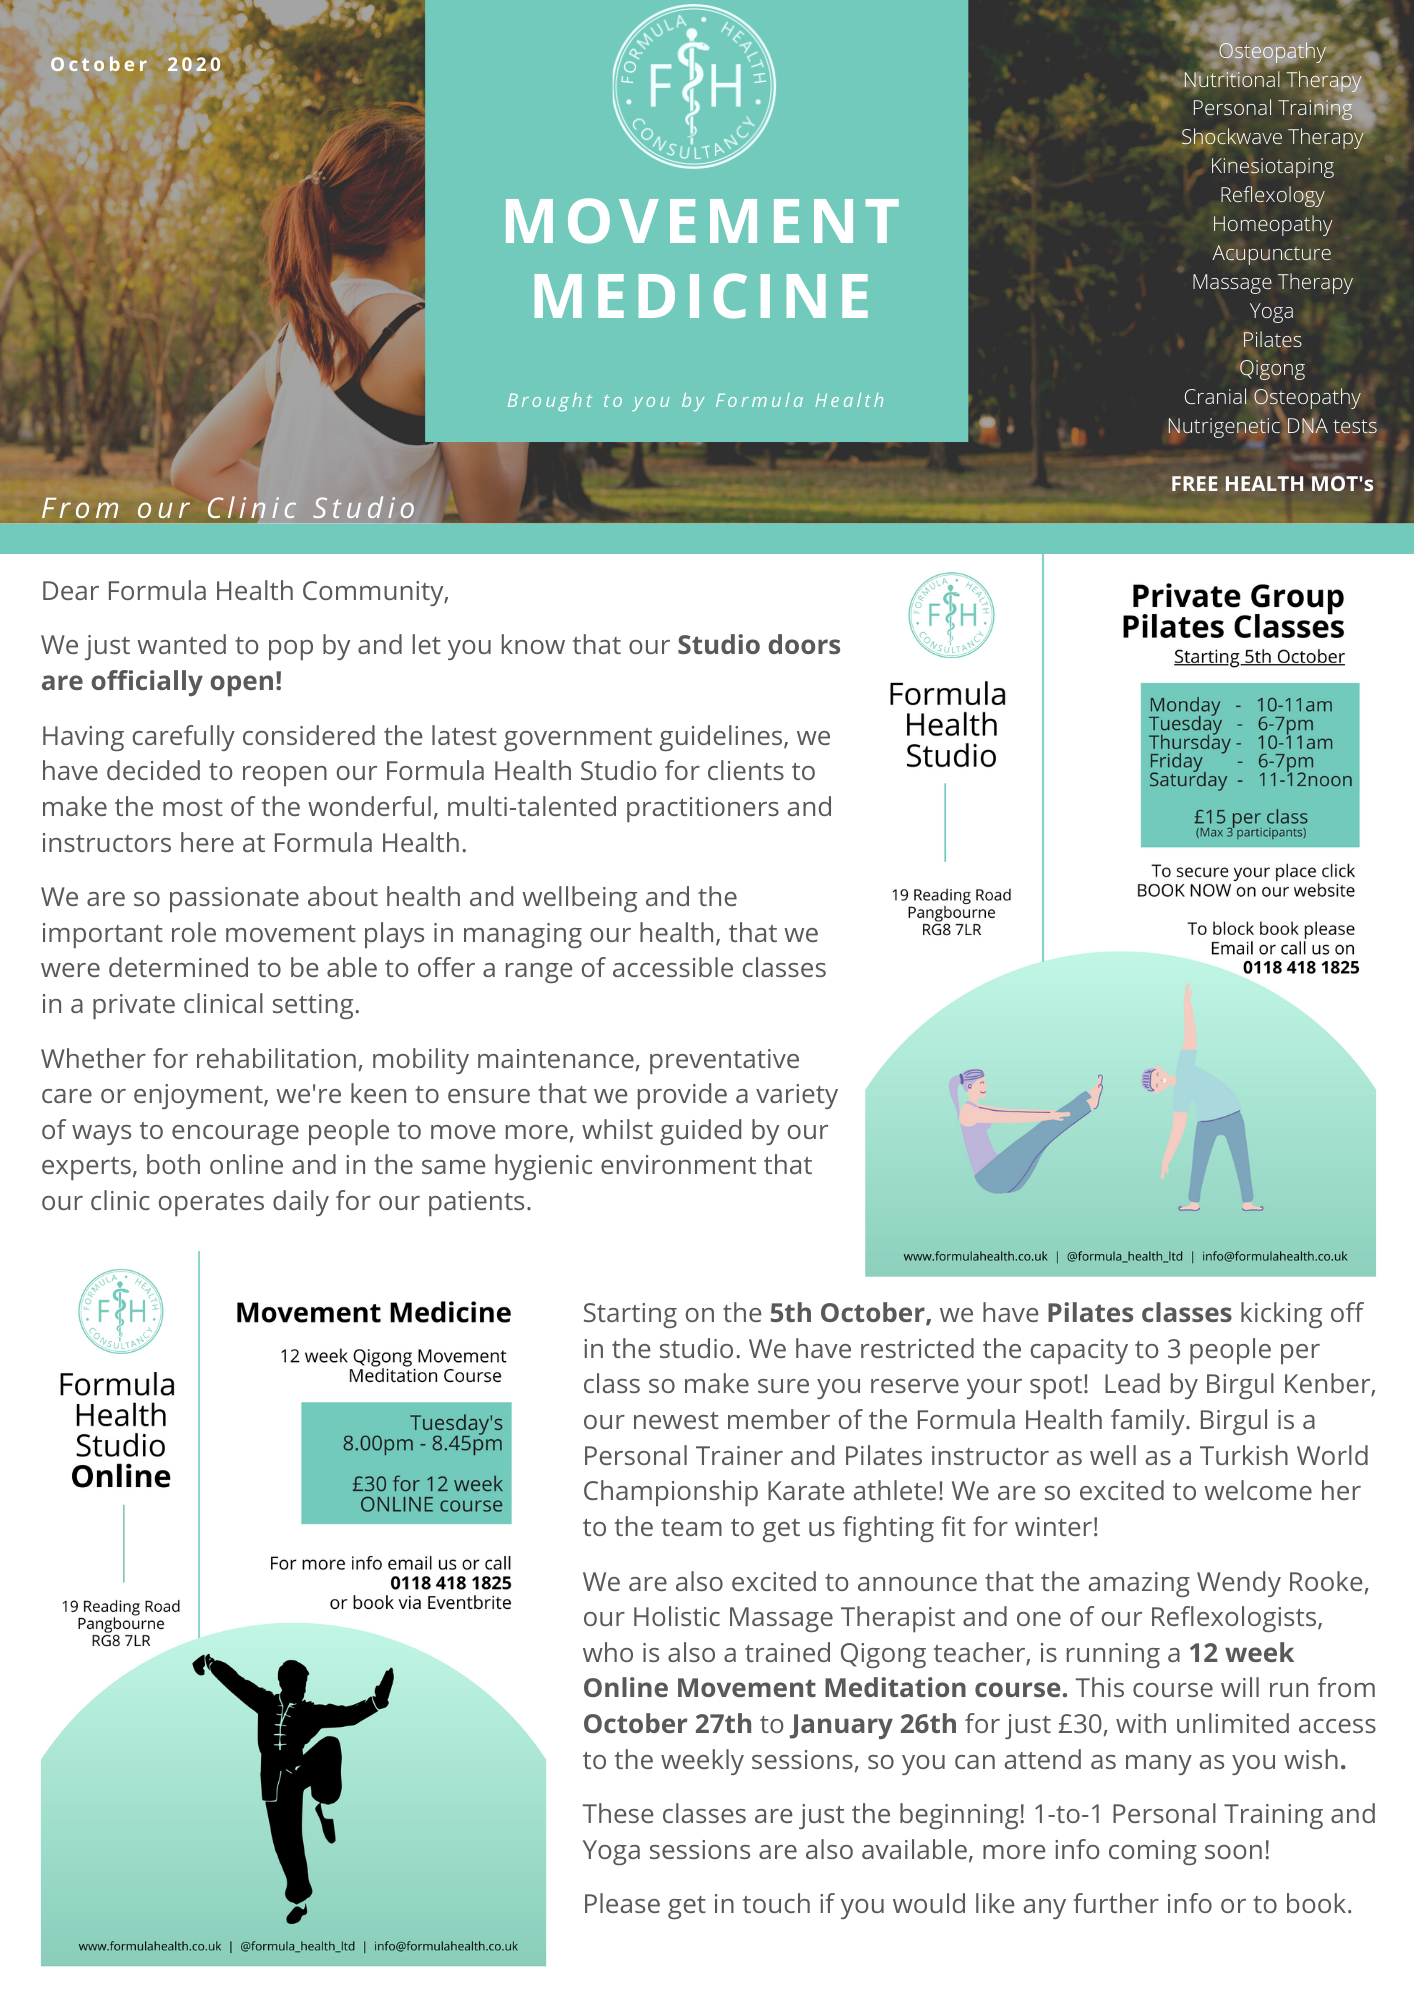 October Newsletter - Movement Medicine